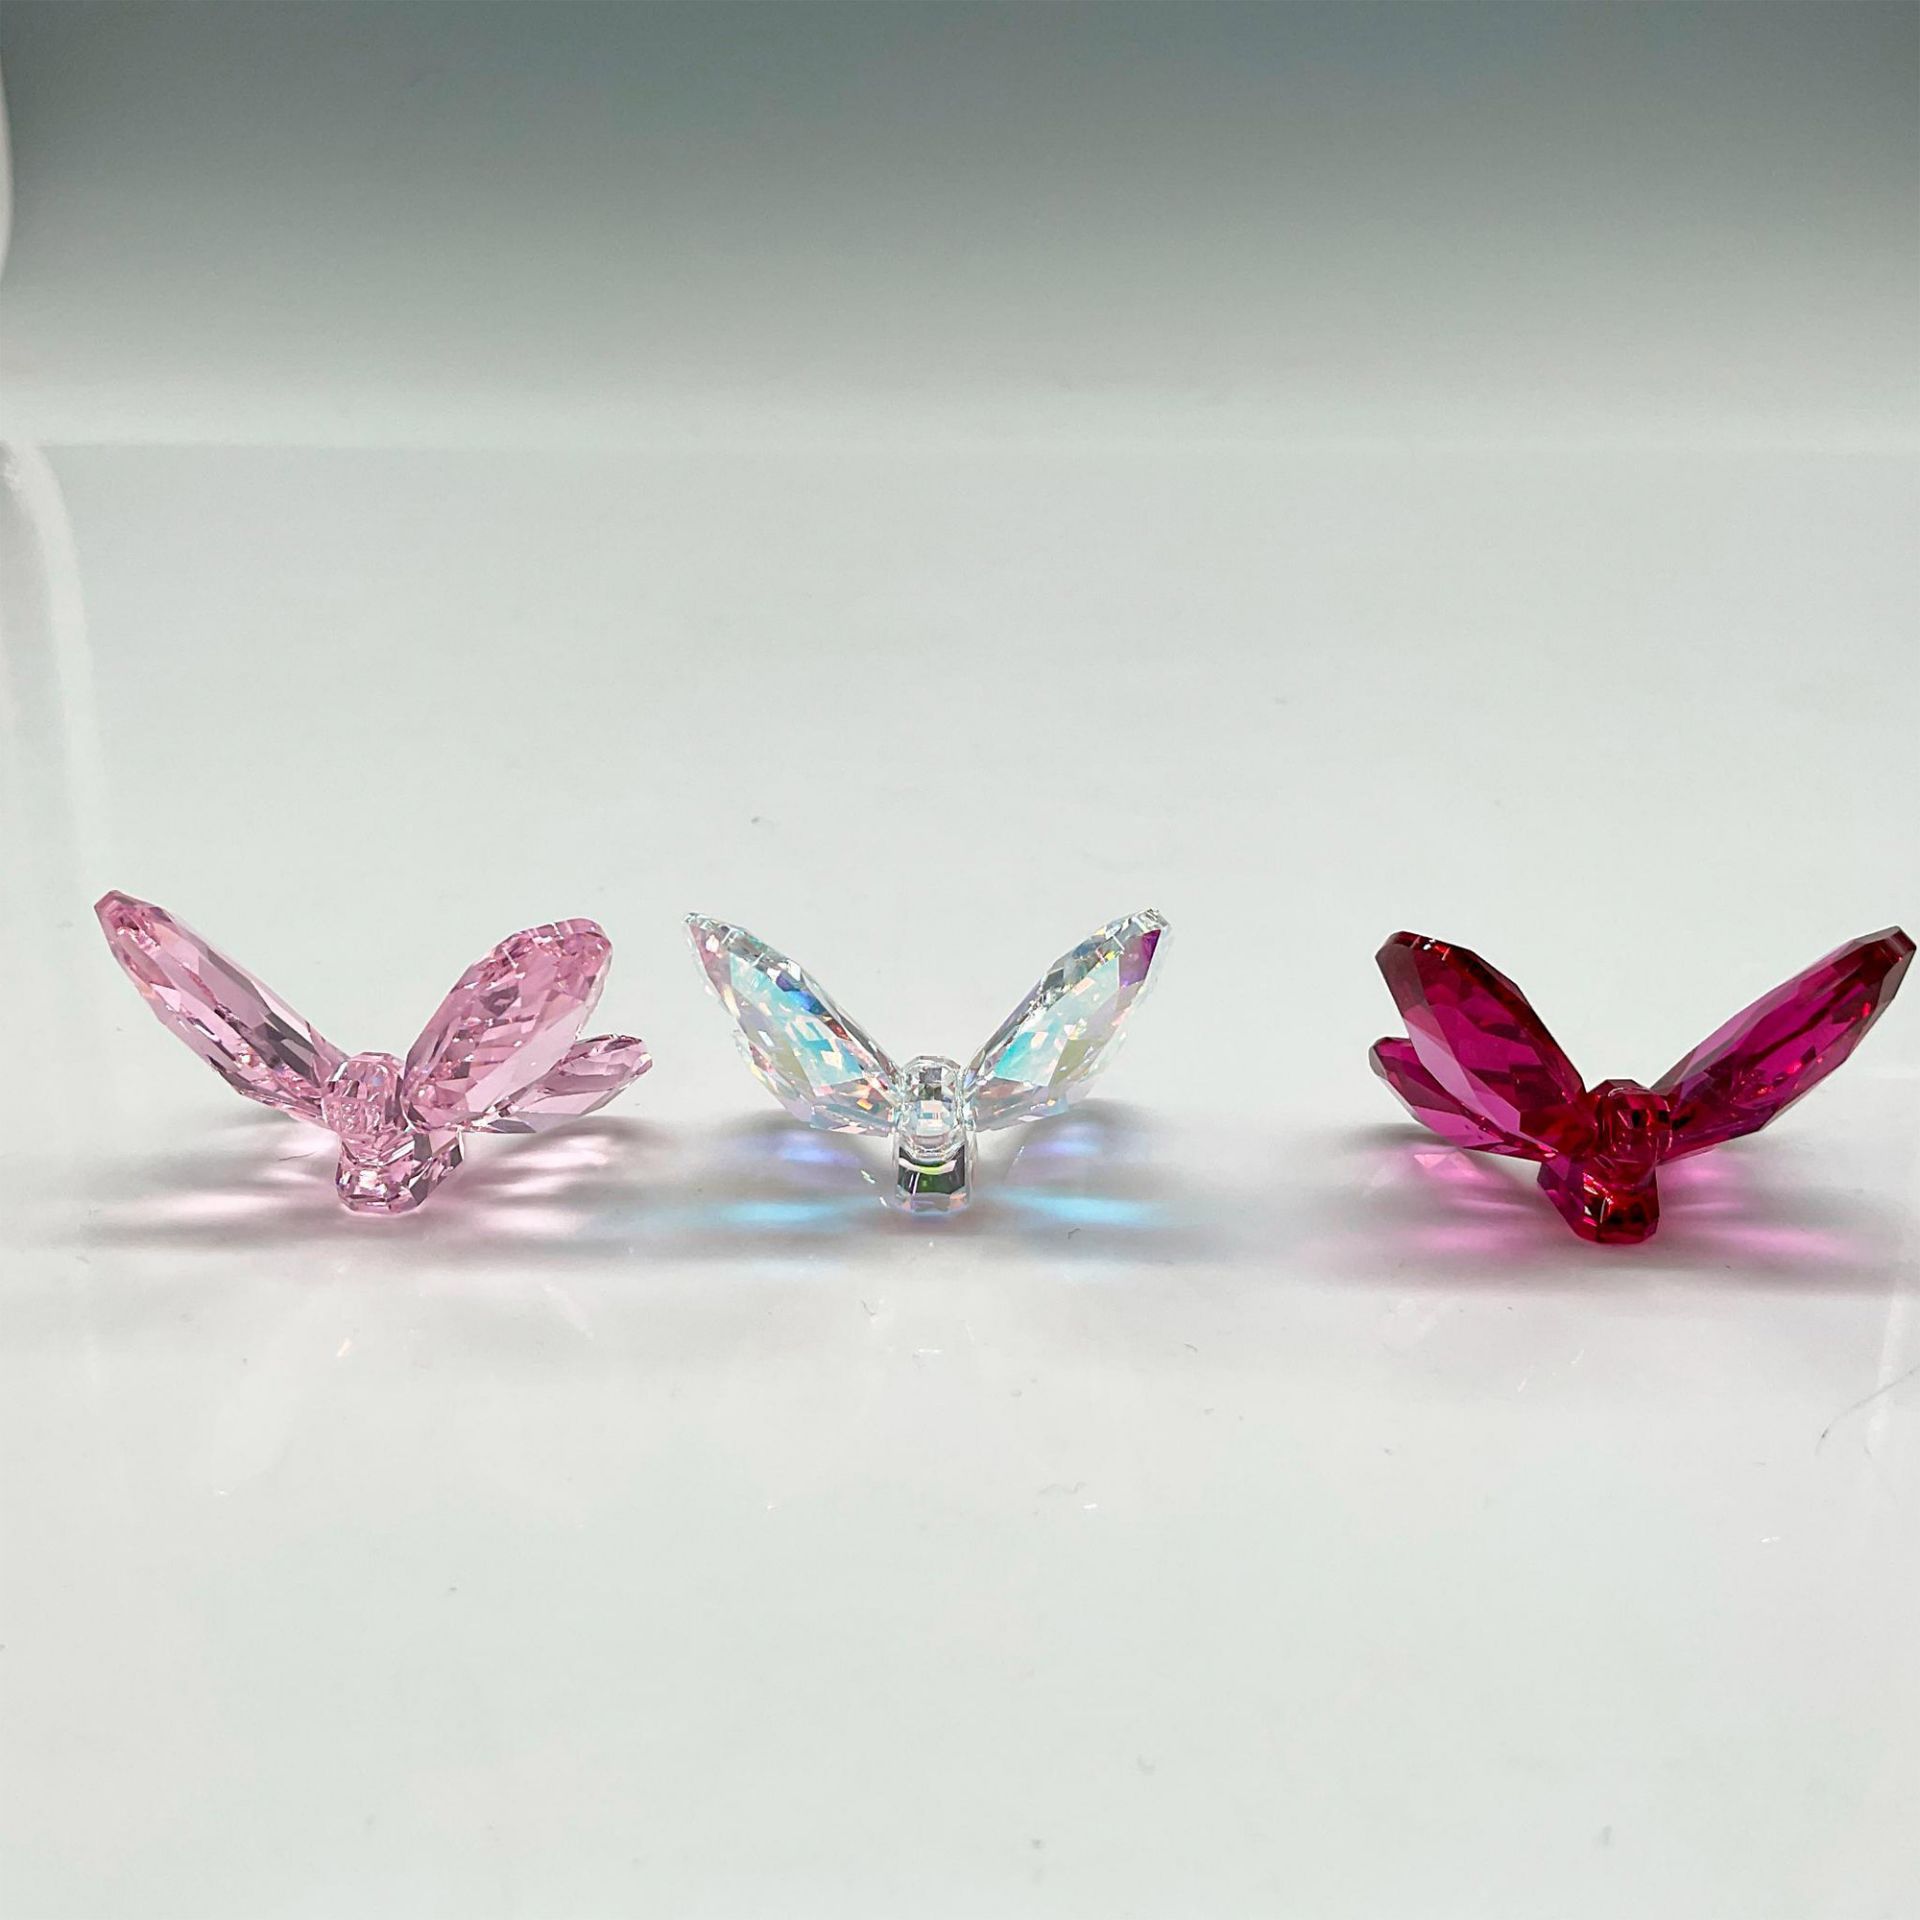 Swarovski Crystal Figurines, Set of 3 Small Butterflies - Image 2 of 4